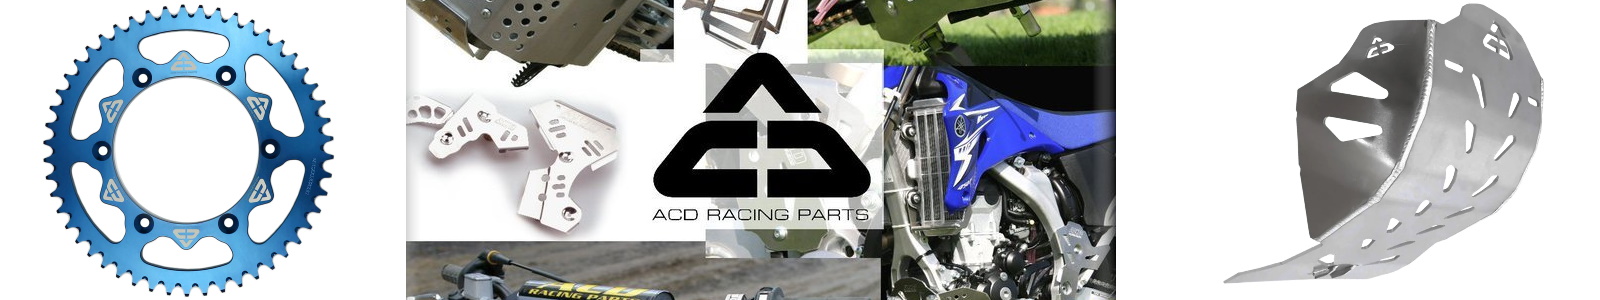 ACD motorcycle fairings Racing Parts